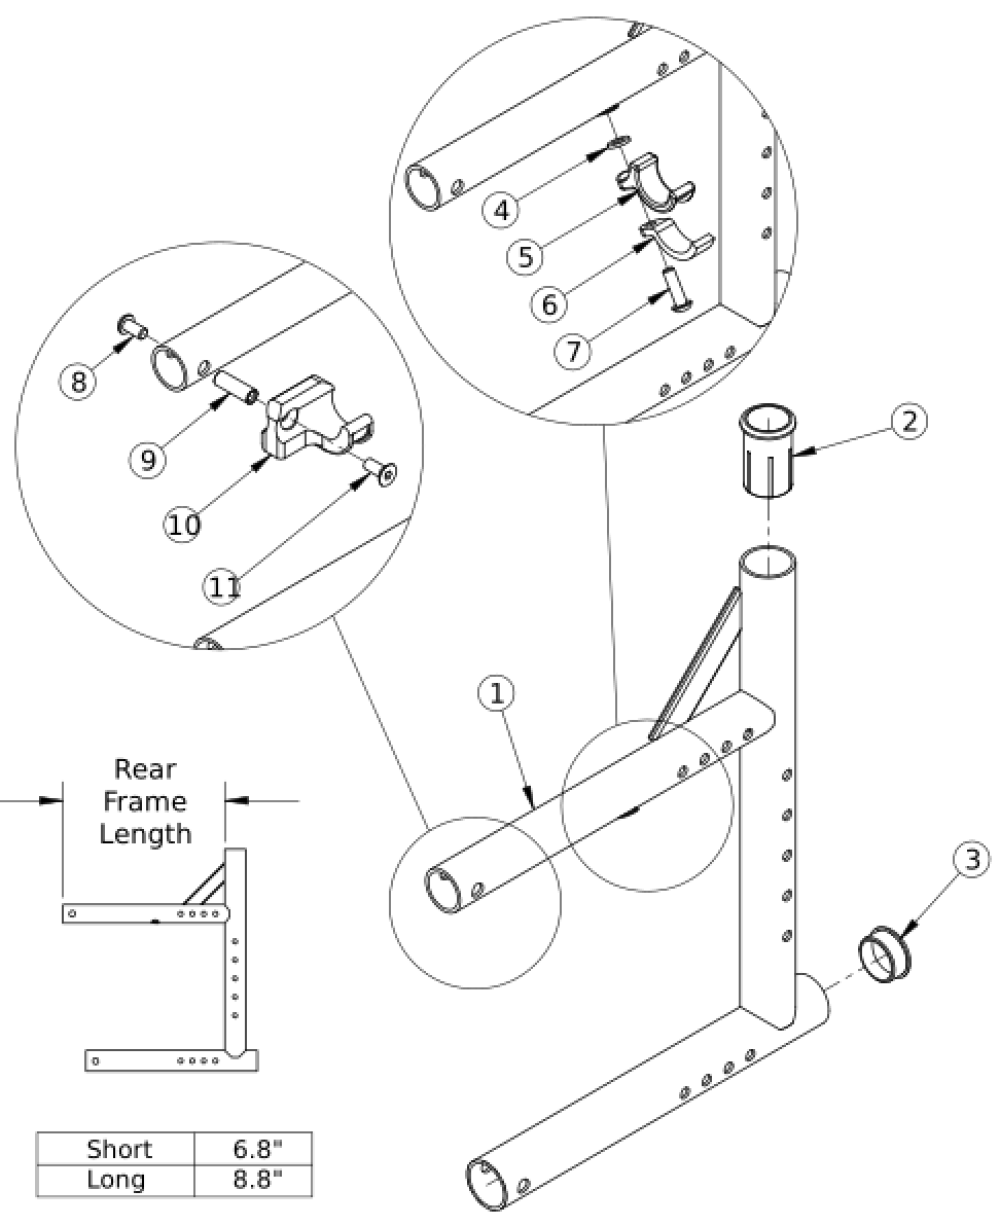 (discontinued) Catalyst 5vx Rear Frame parts diagram